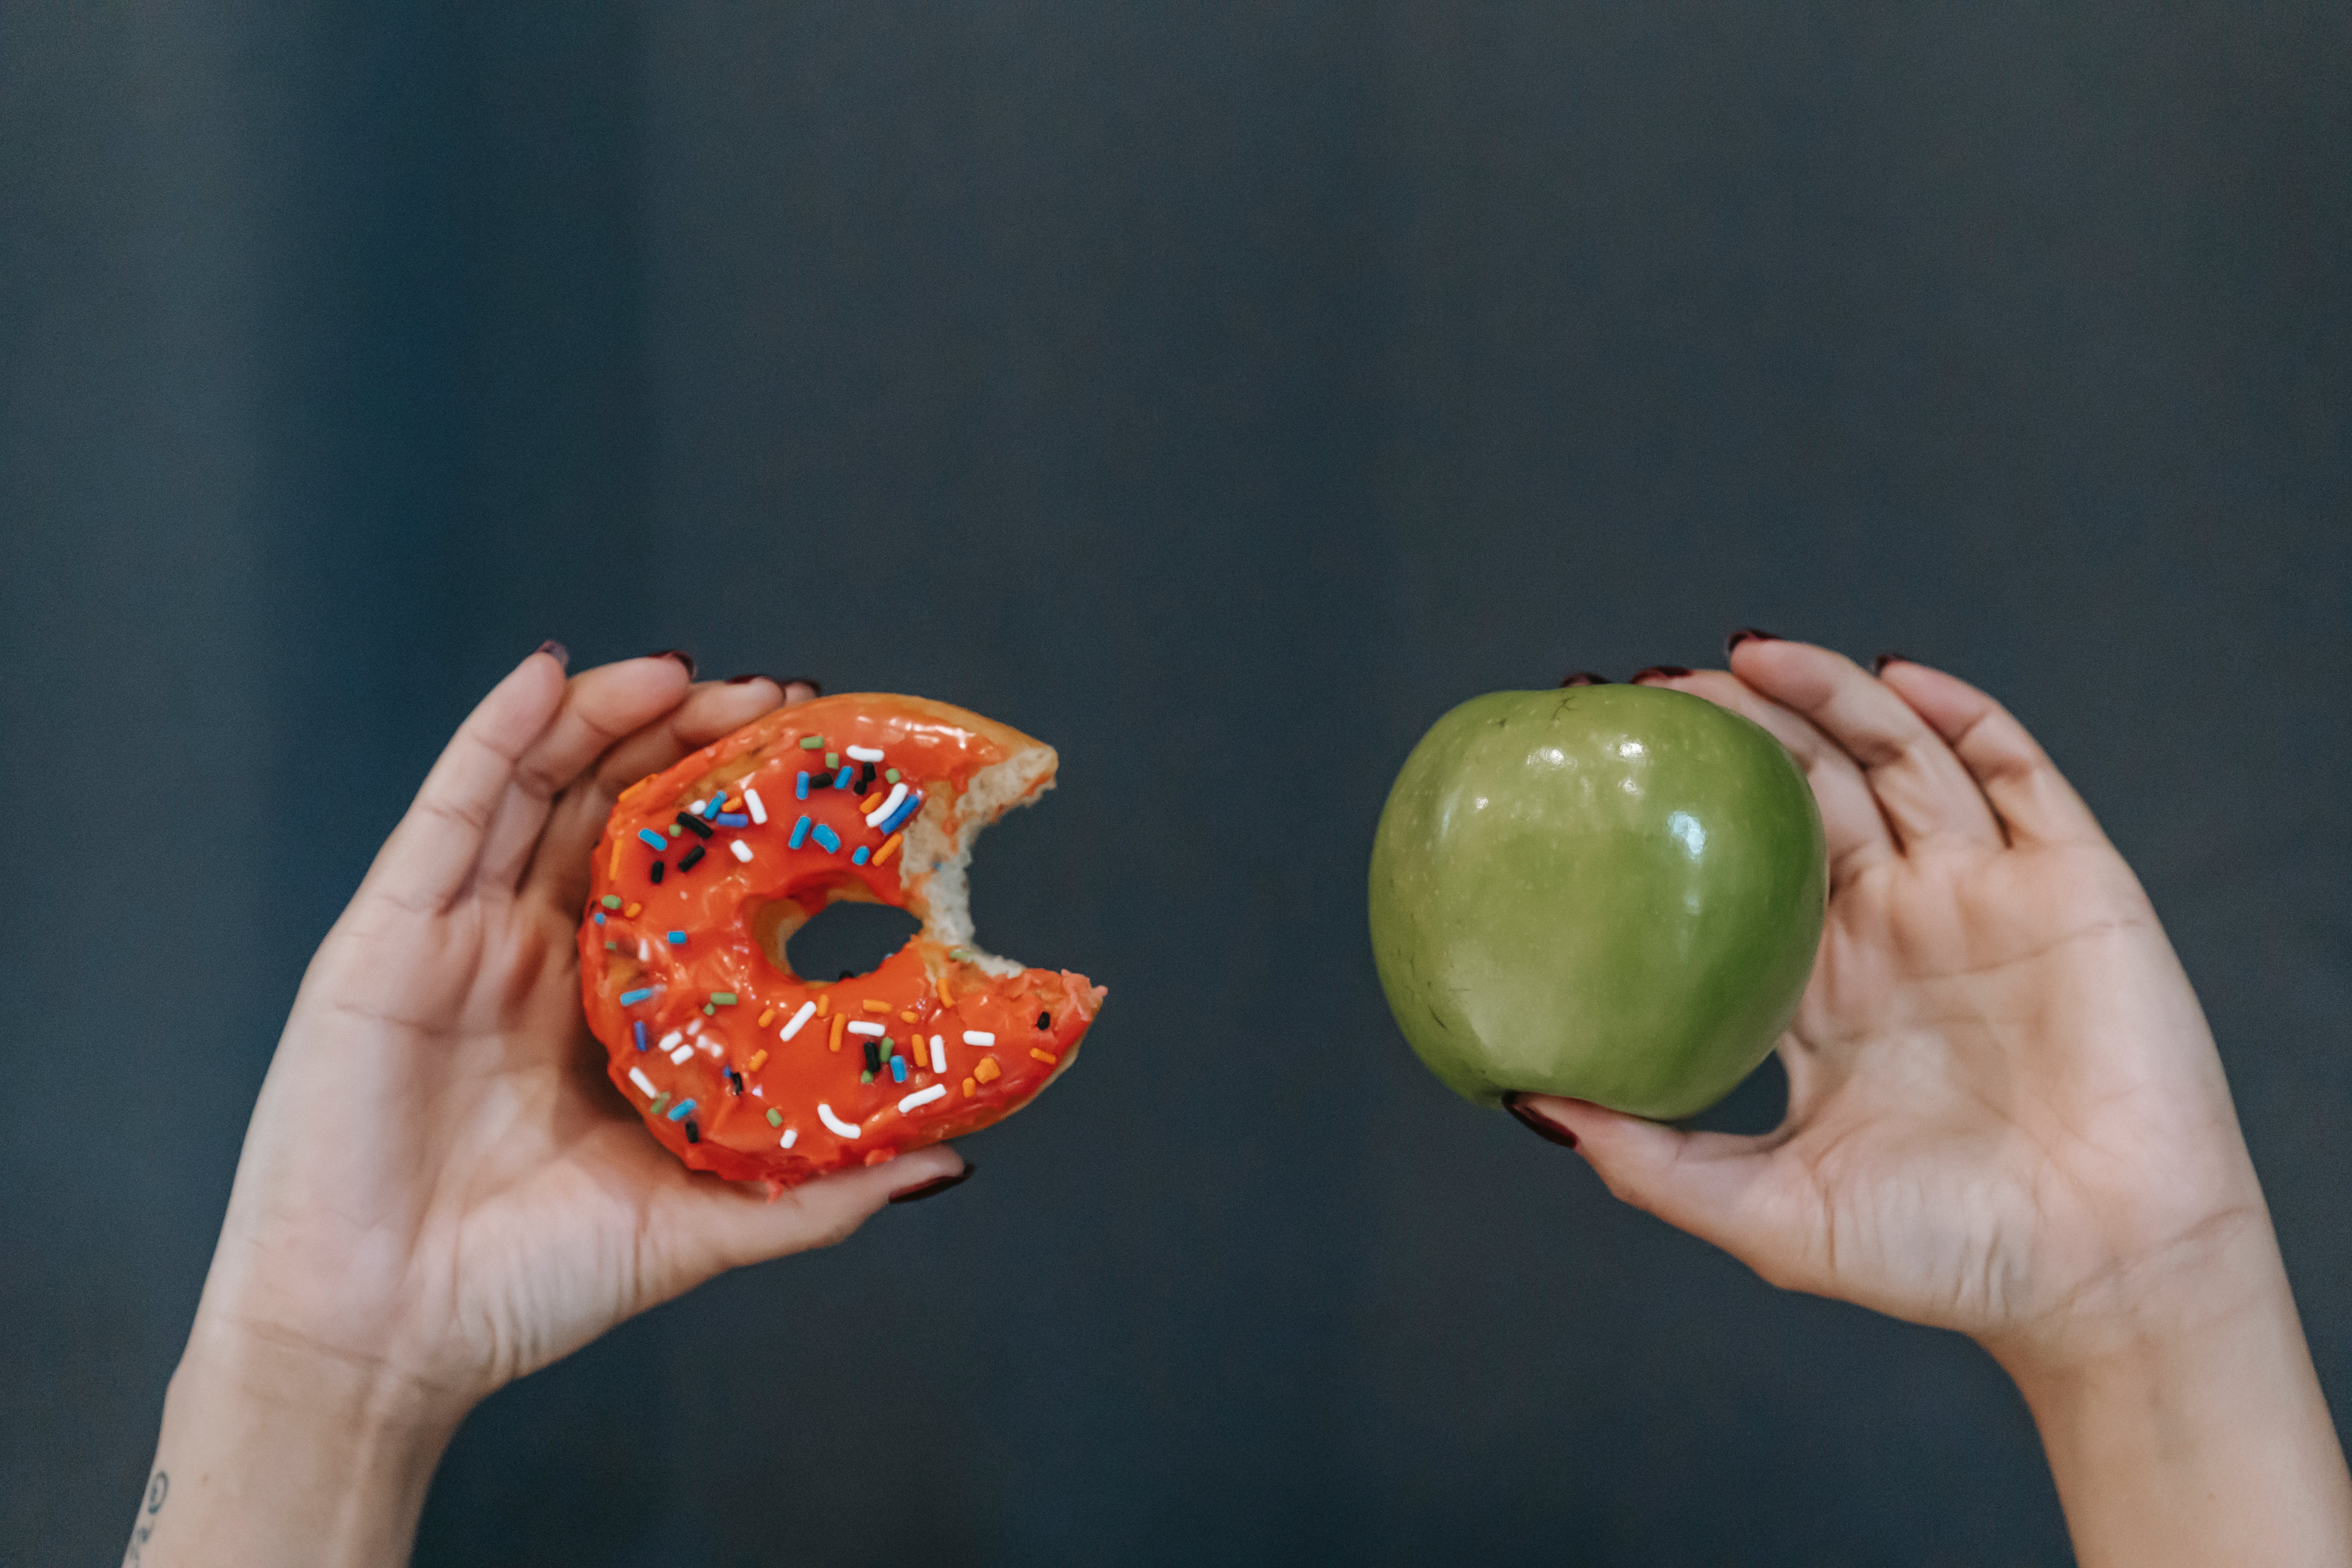 Hands holding a doughnut and an apple